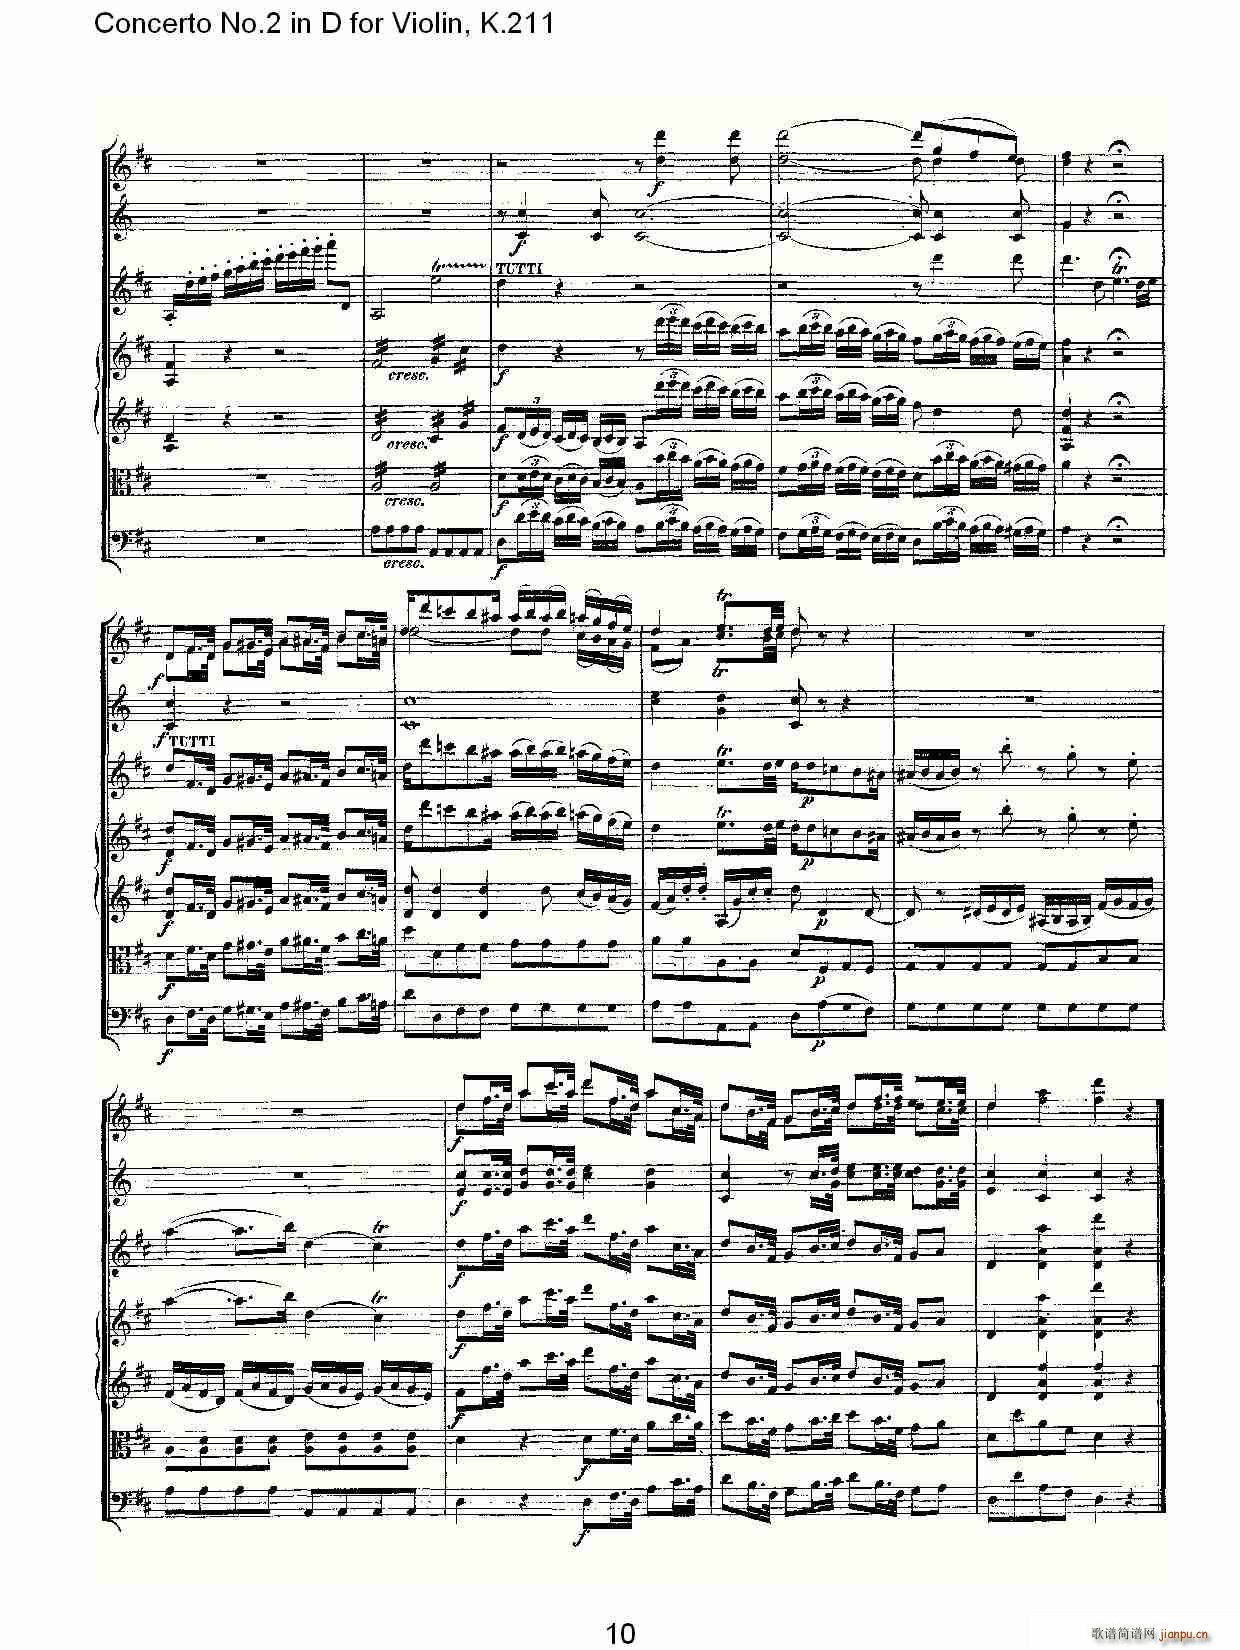 Concerto No.2 in D for Violin, K.211(С)10